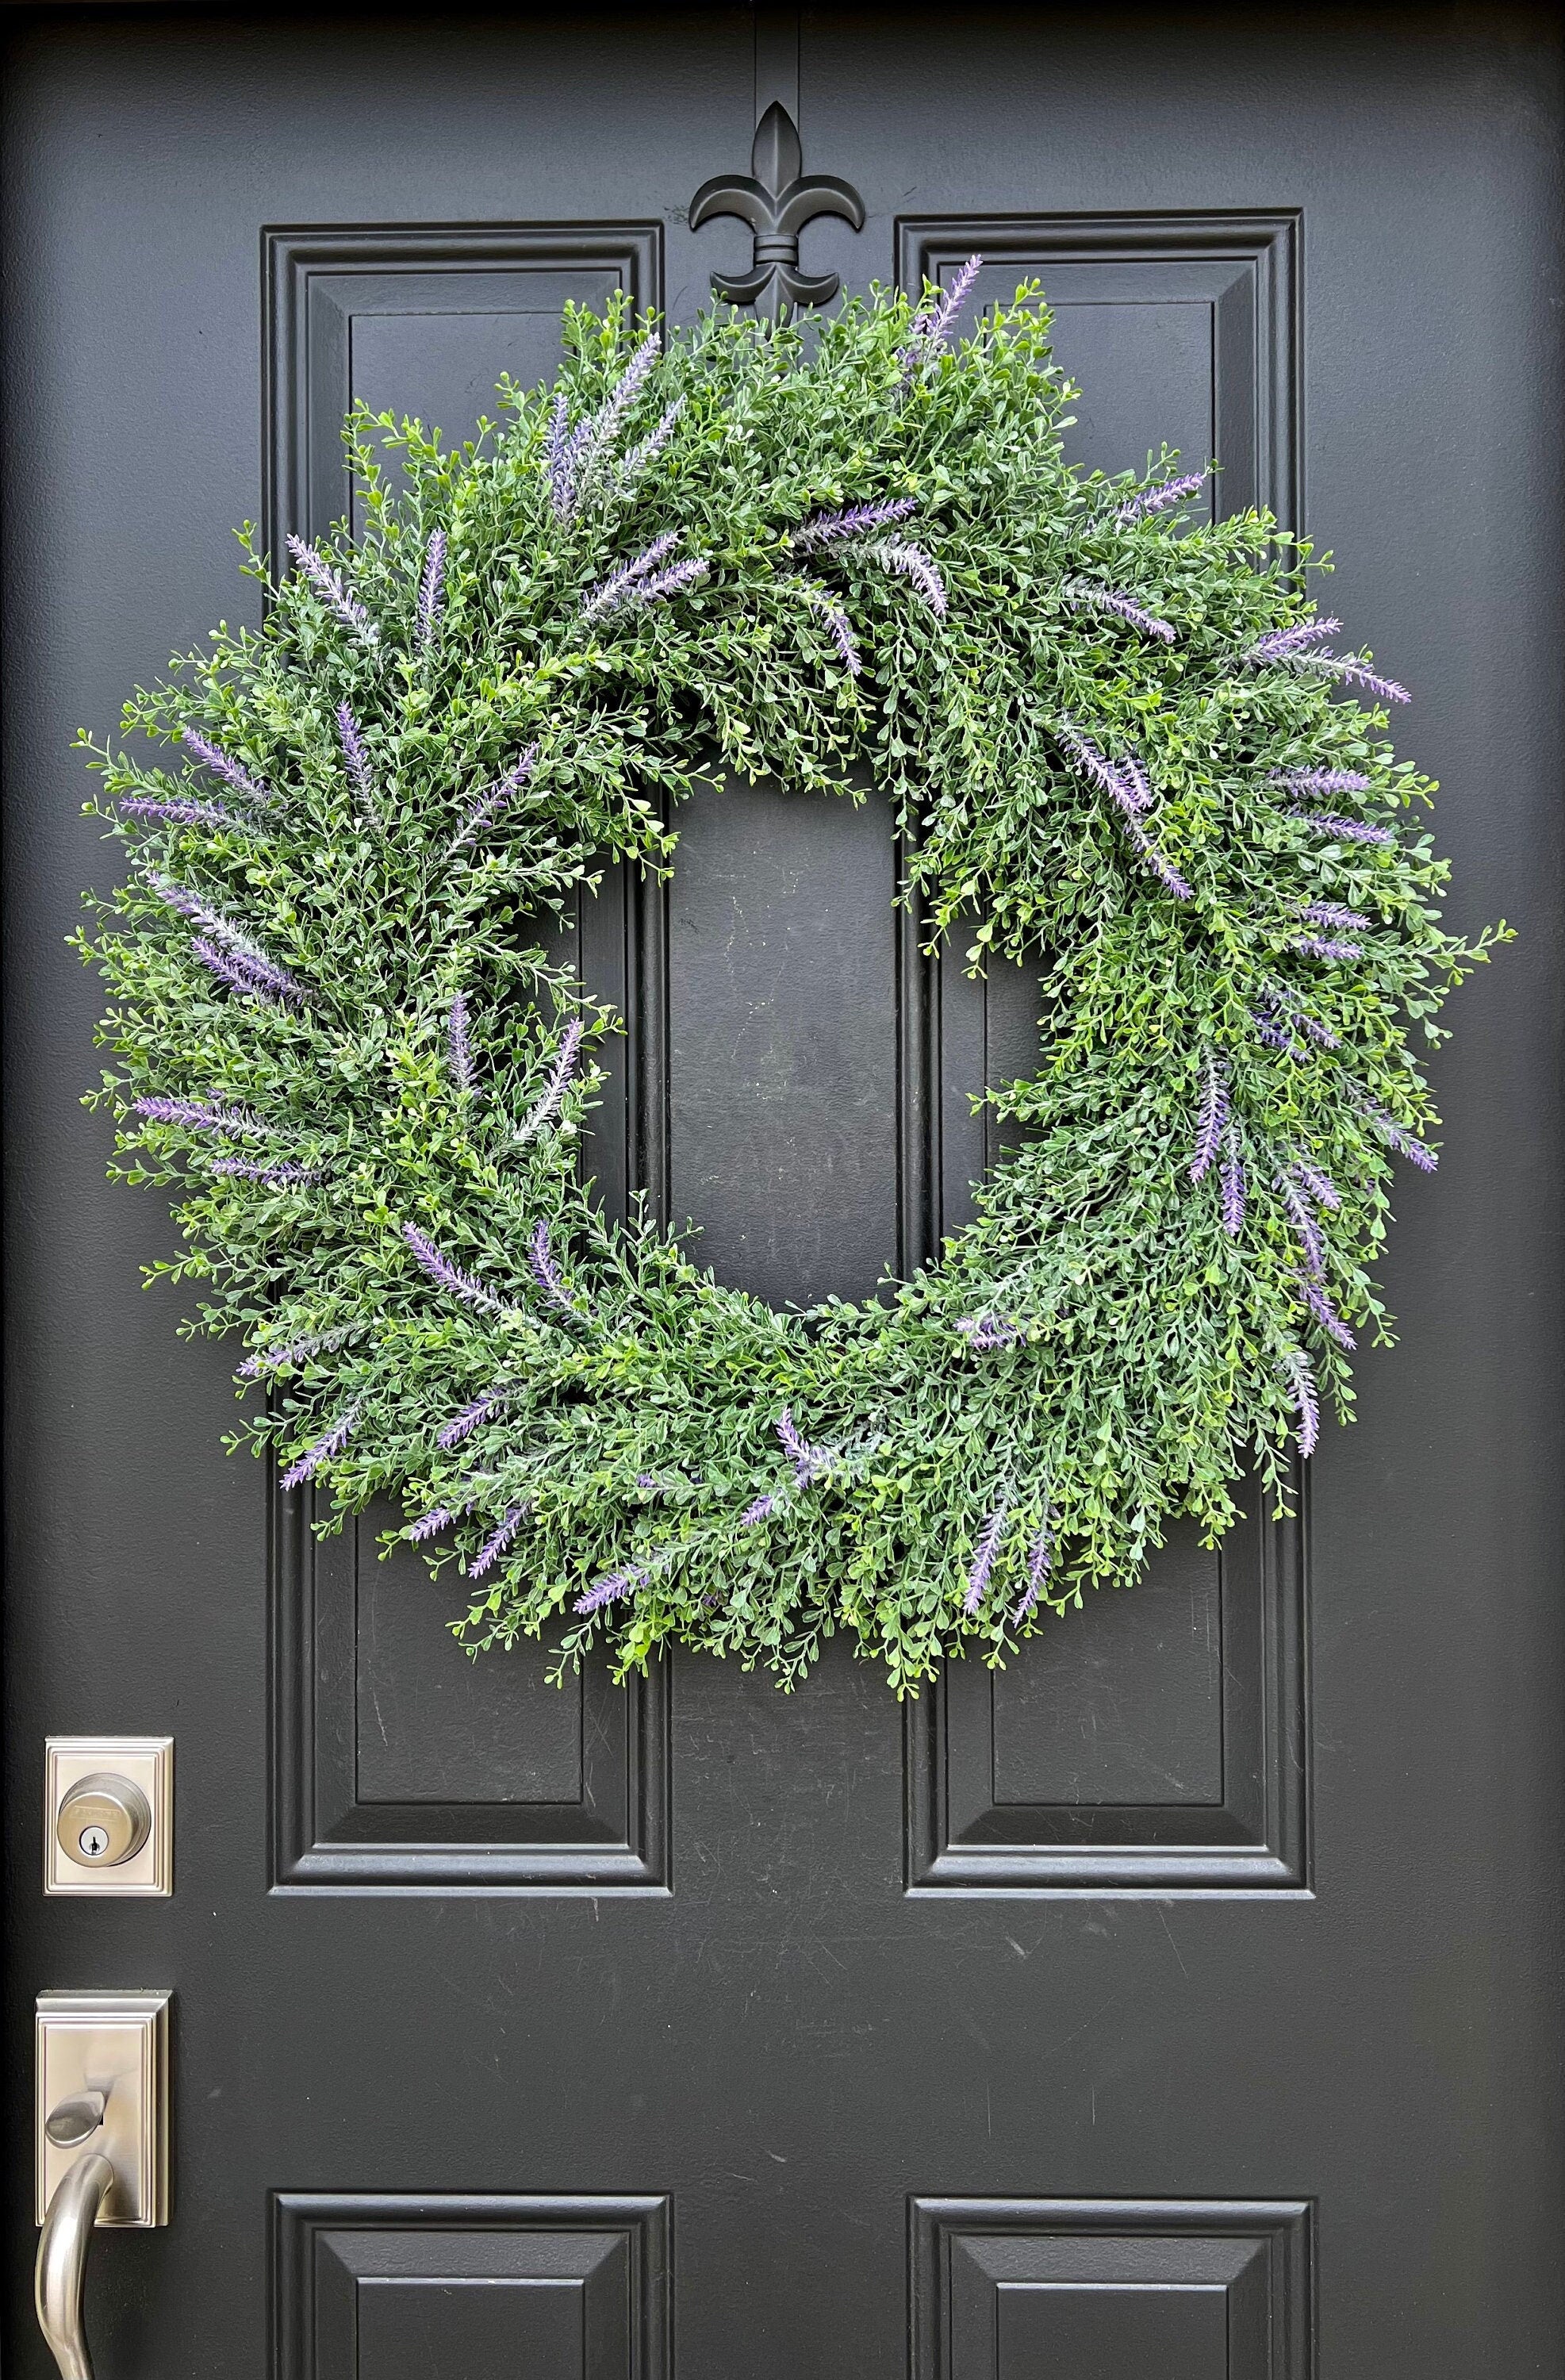 XL Lush Greenery Wreath with Lavender